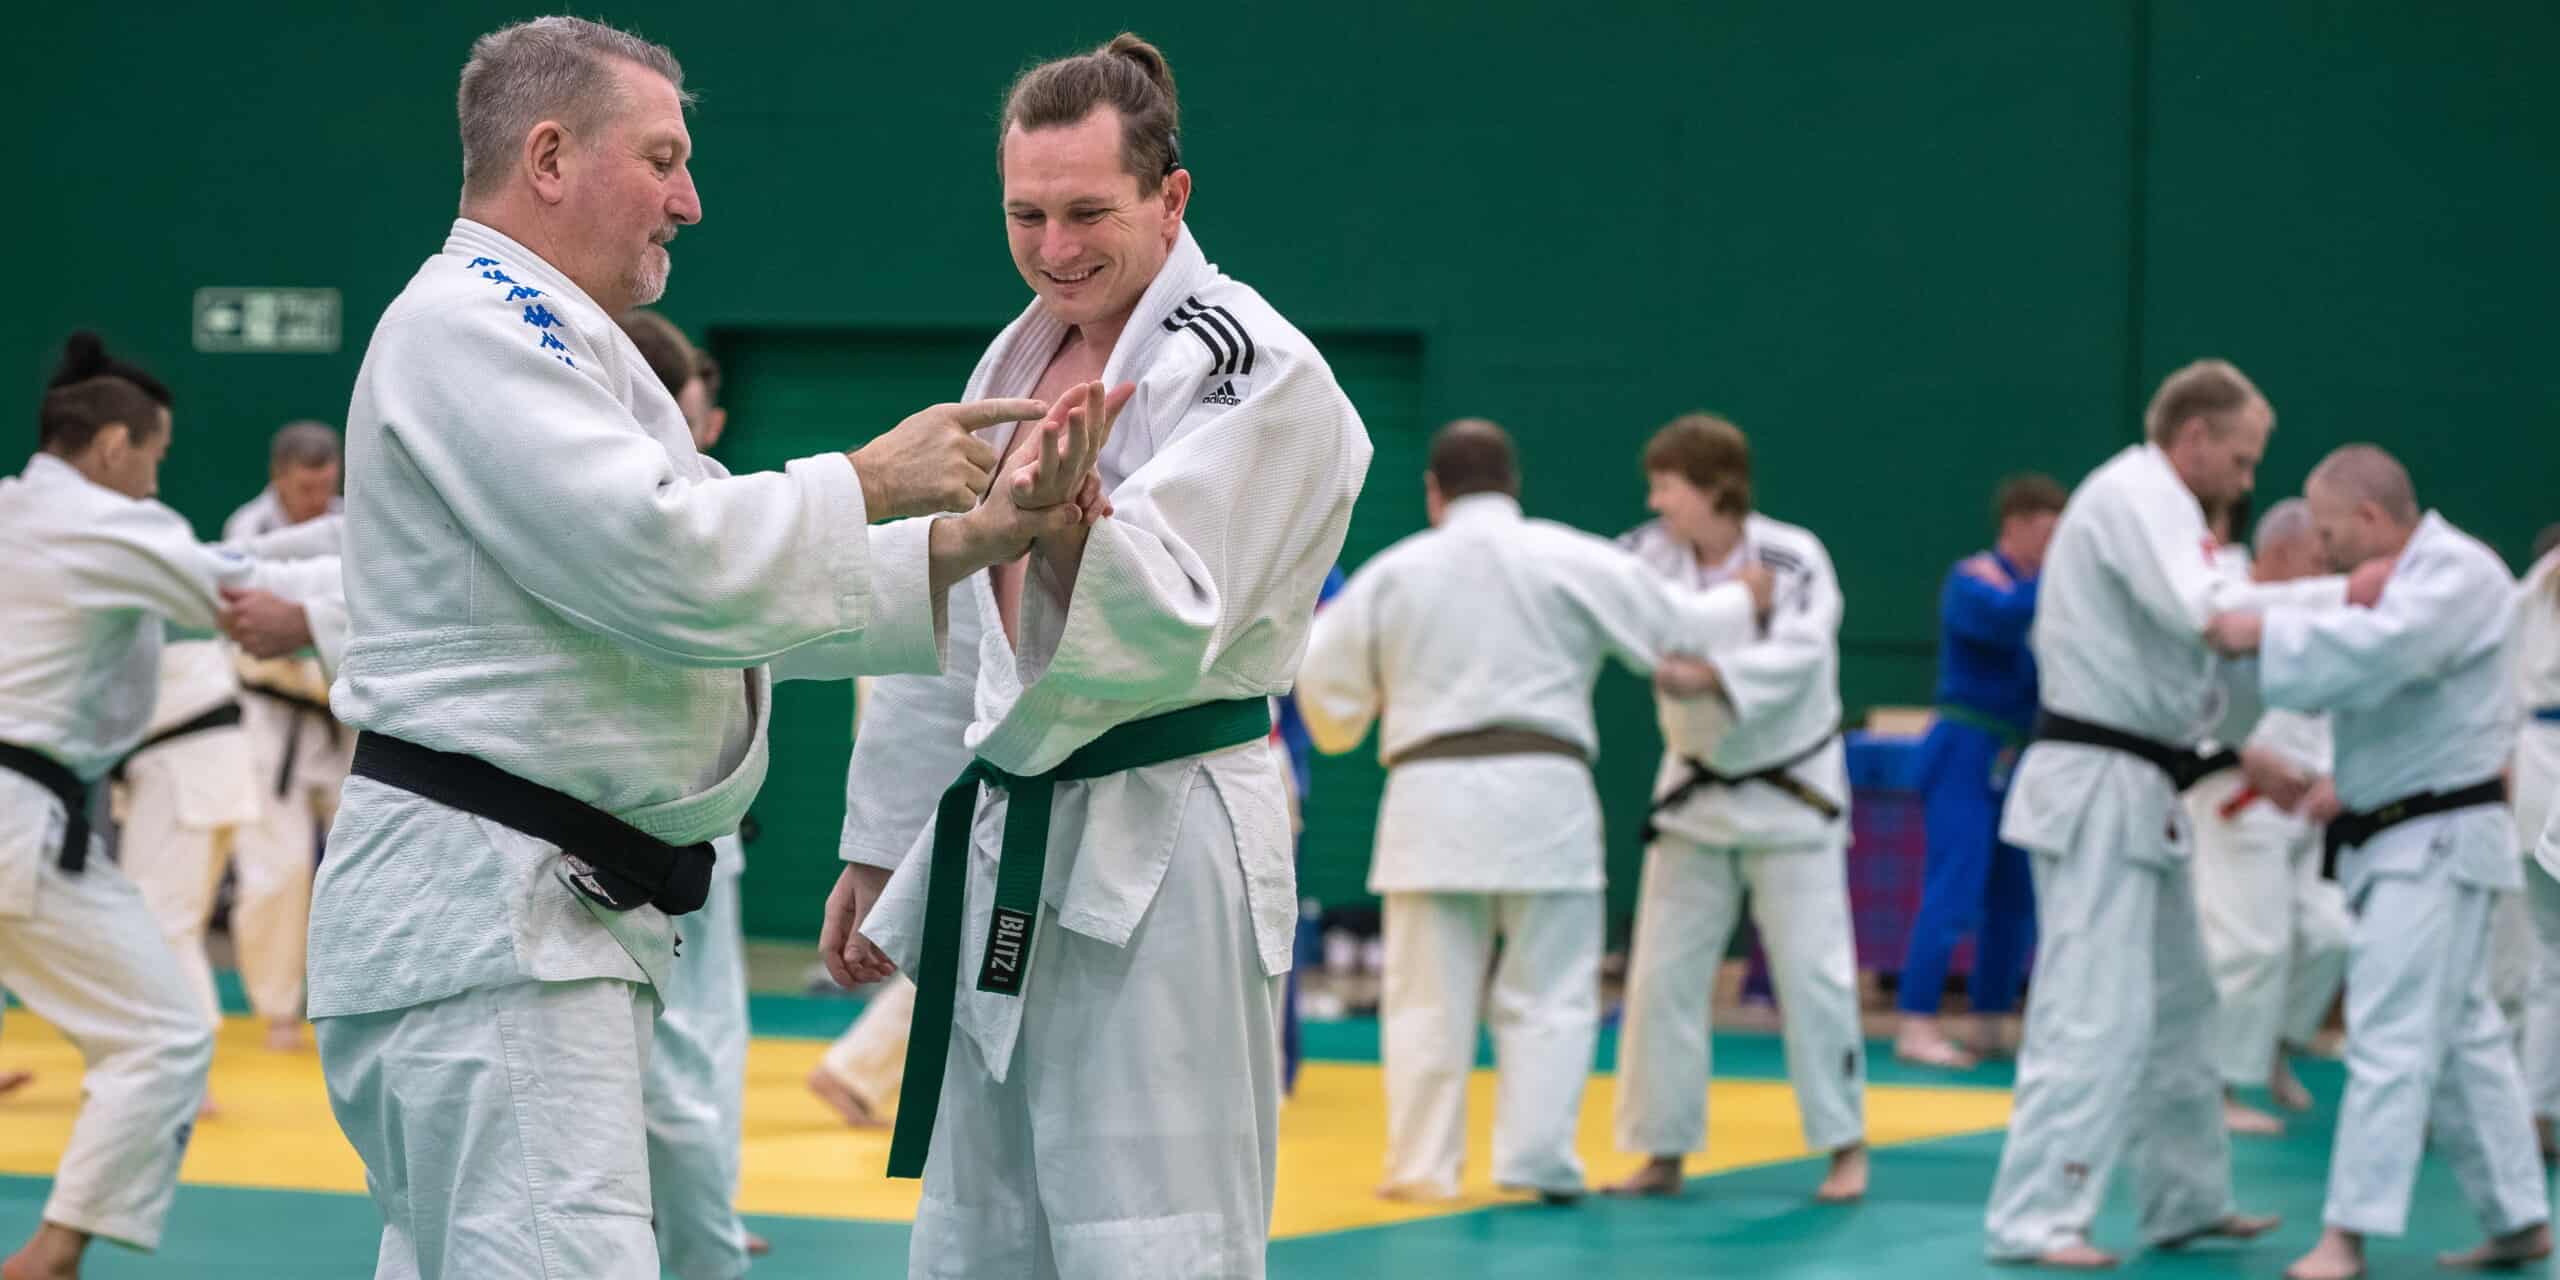 Judoka Chris Nicol with club coach Charlie Strachan communicating through tactile sign language on a judo mat.